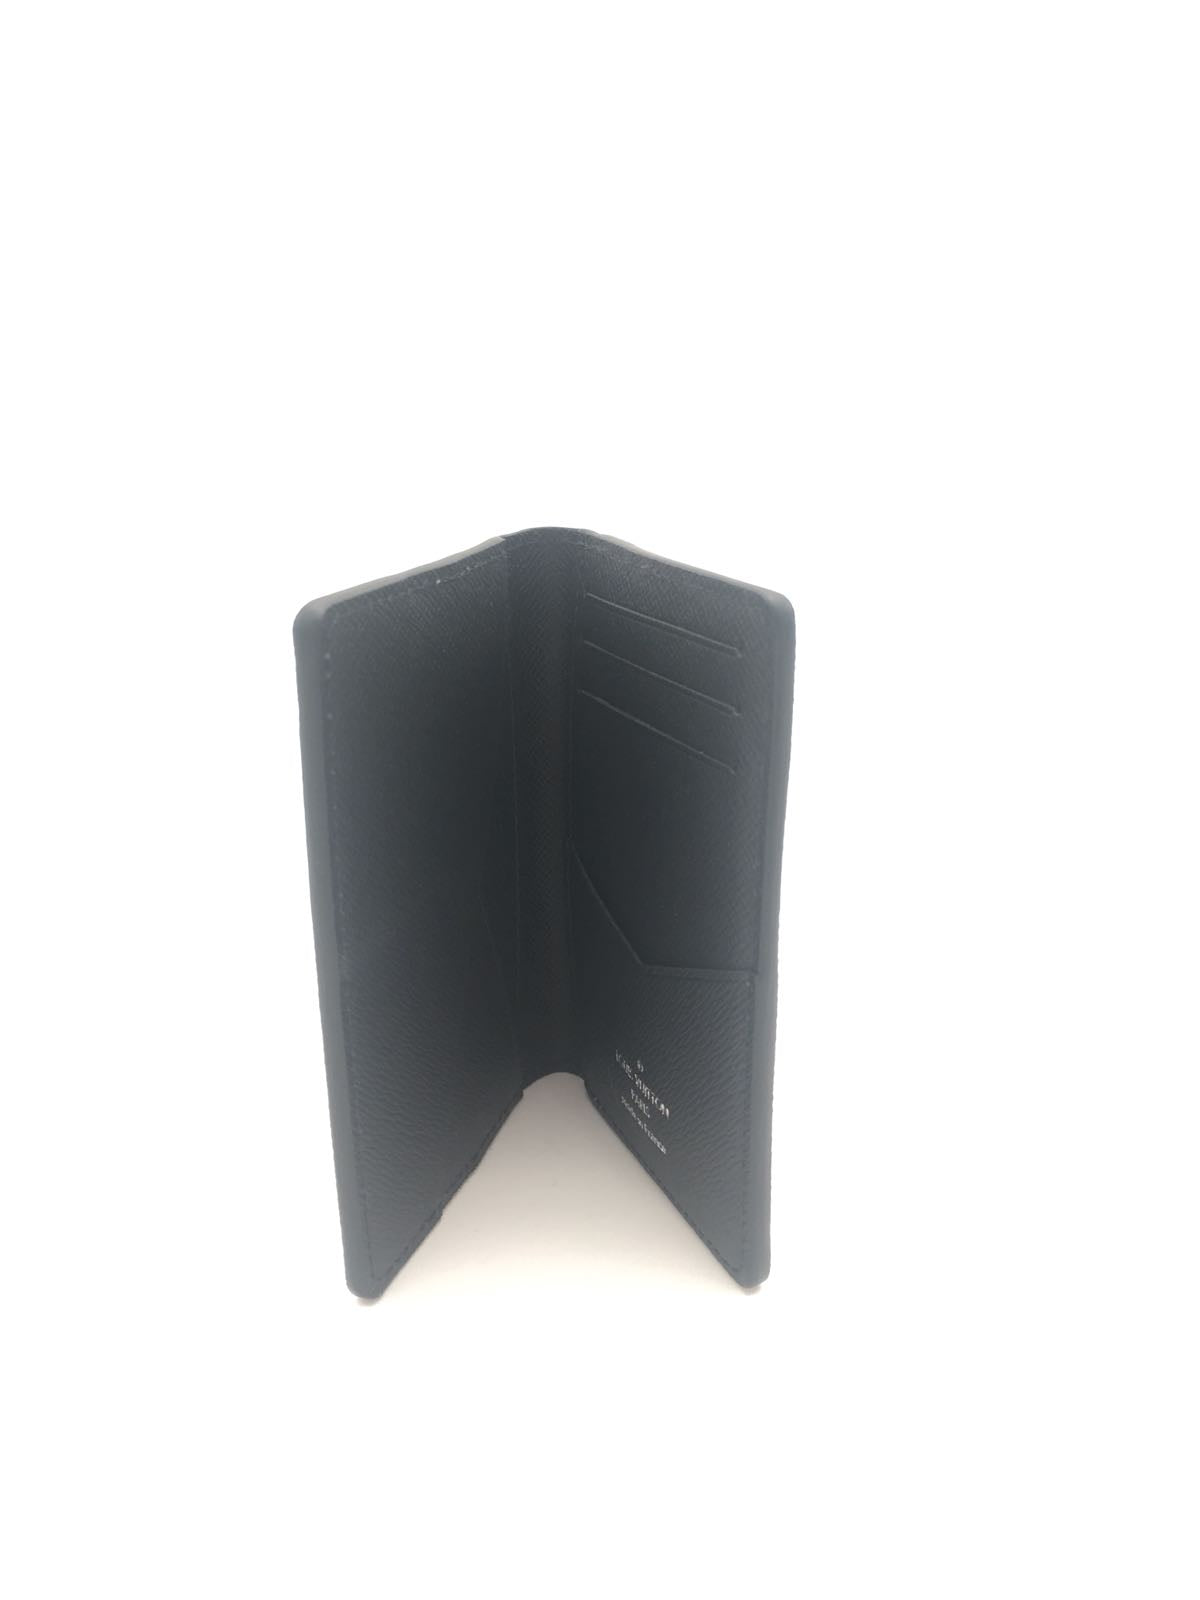 Louis Vuitton Pocket Organizer Black/Gray